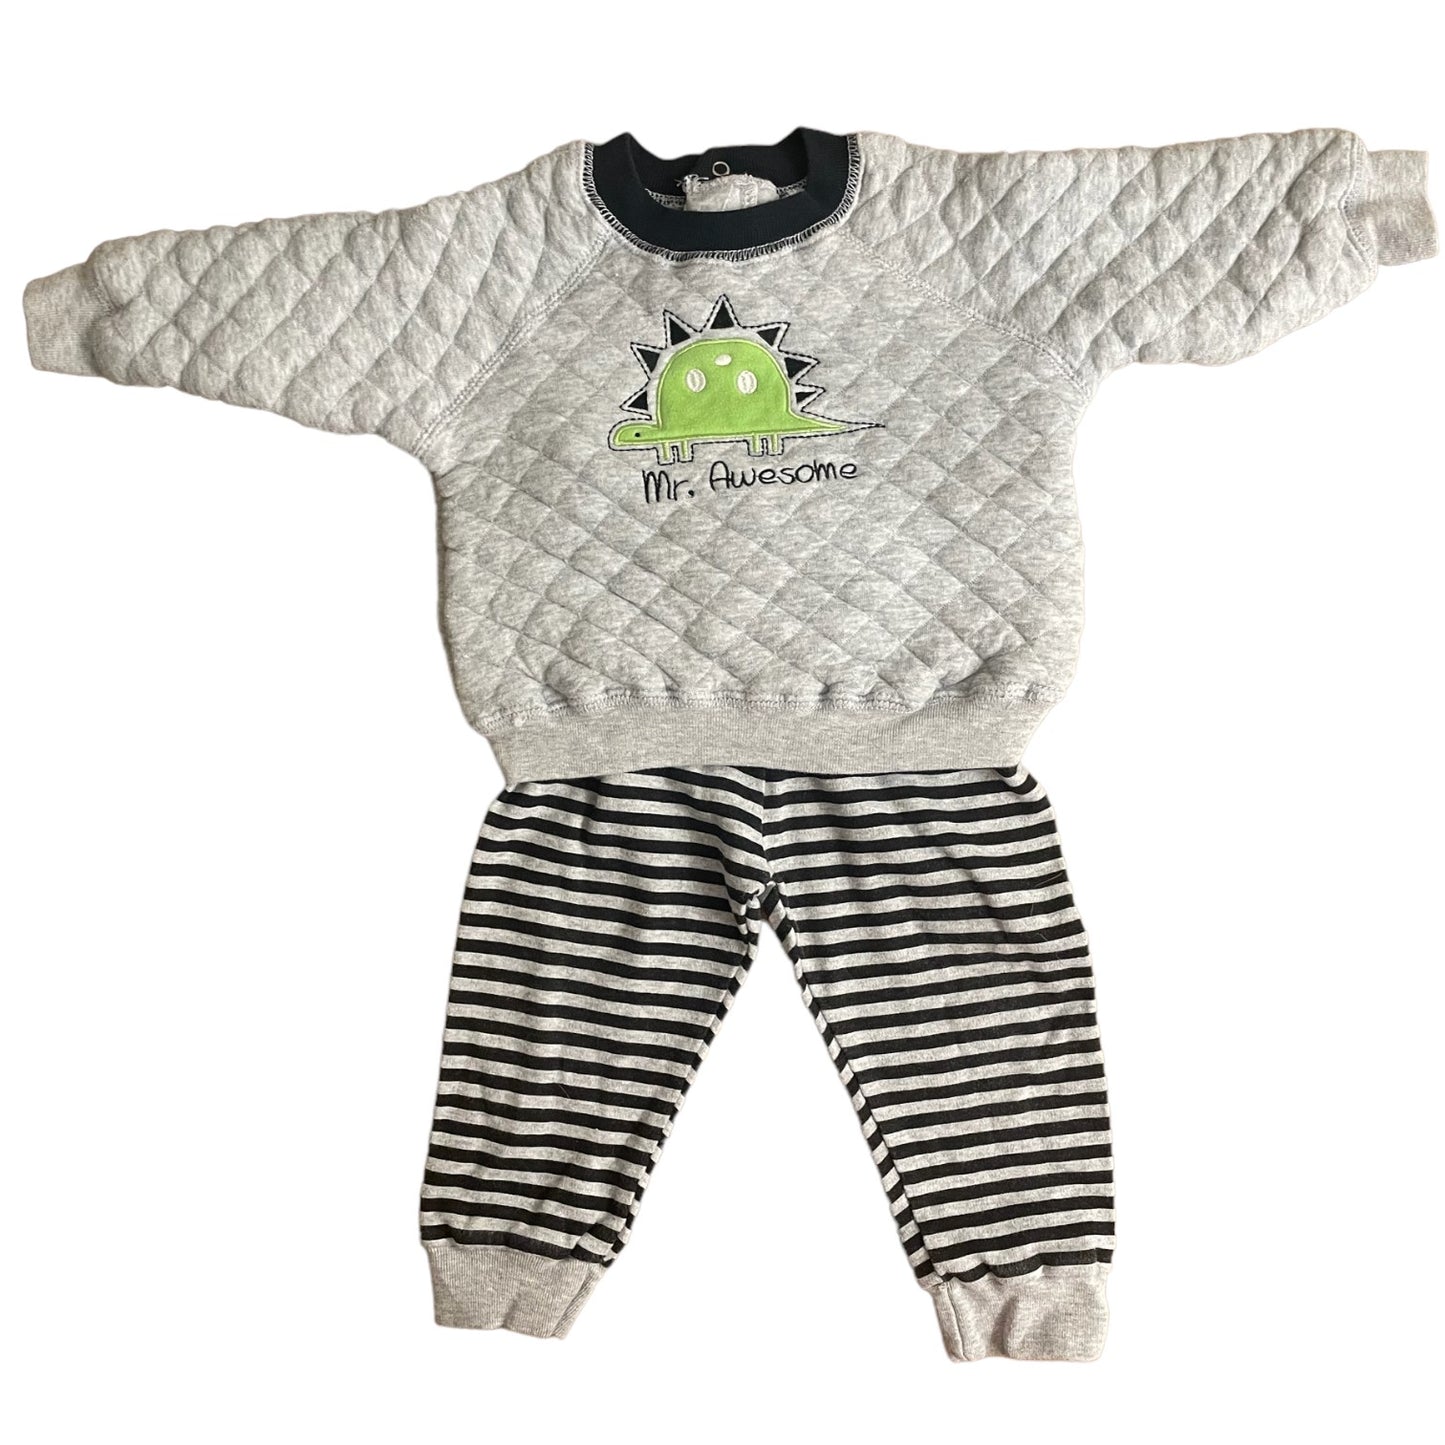 Baby Gear Sweatshirt Set Infant Boys Size 6-9 months